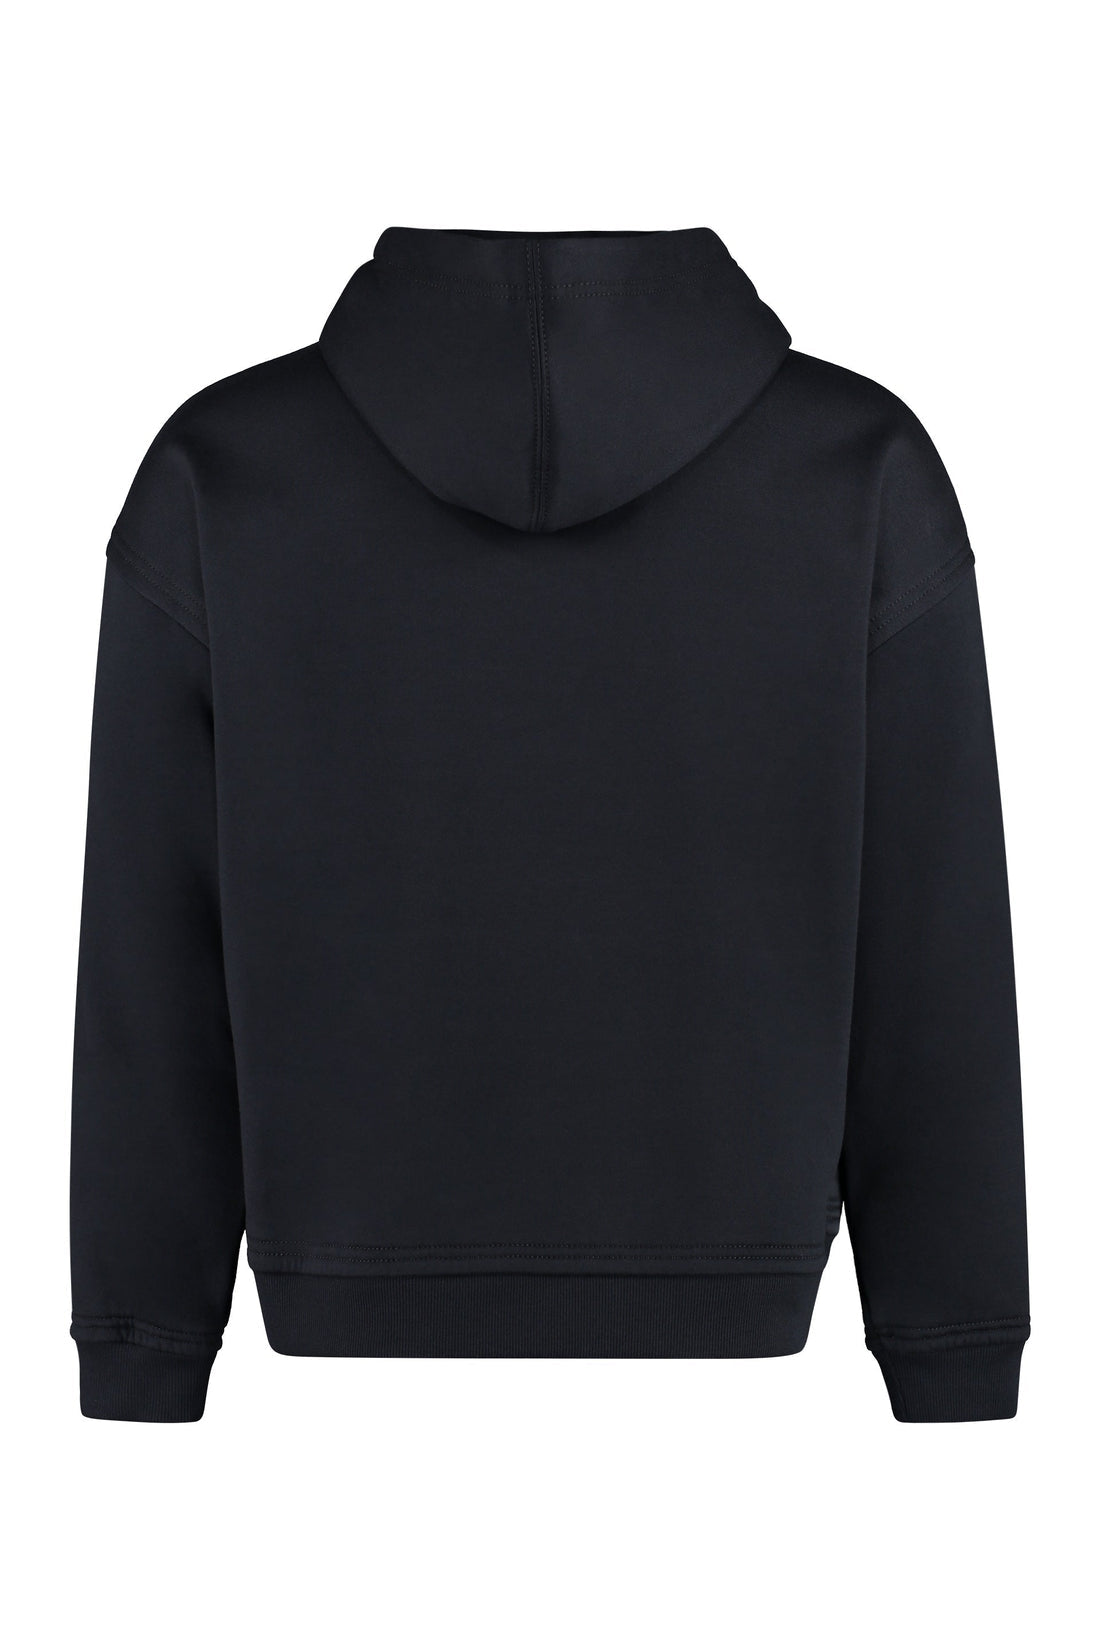 Valentino-OUTLET-SALE-Hooded sweatshirt-ARCHIVIST